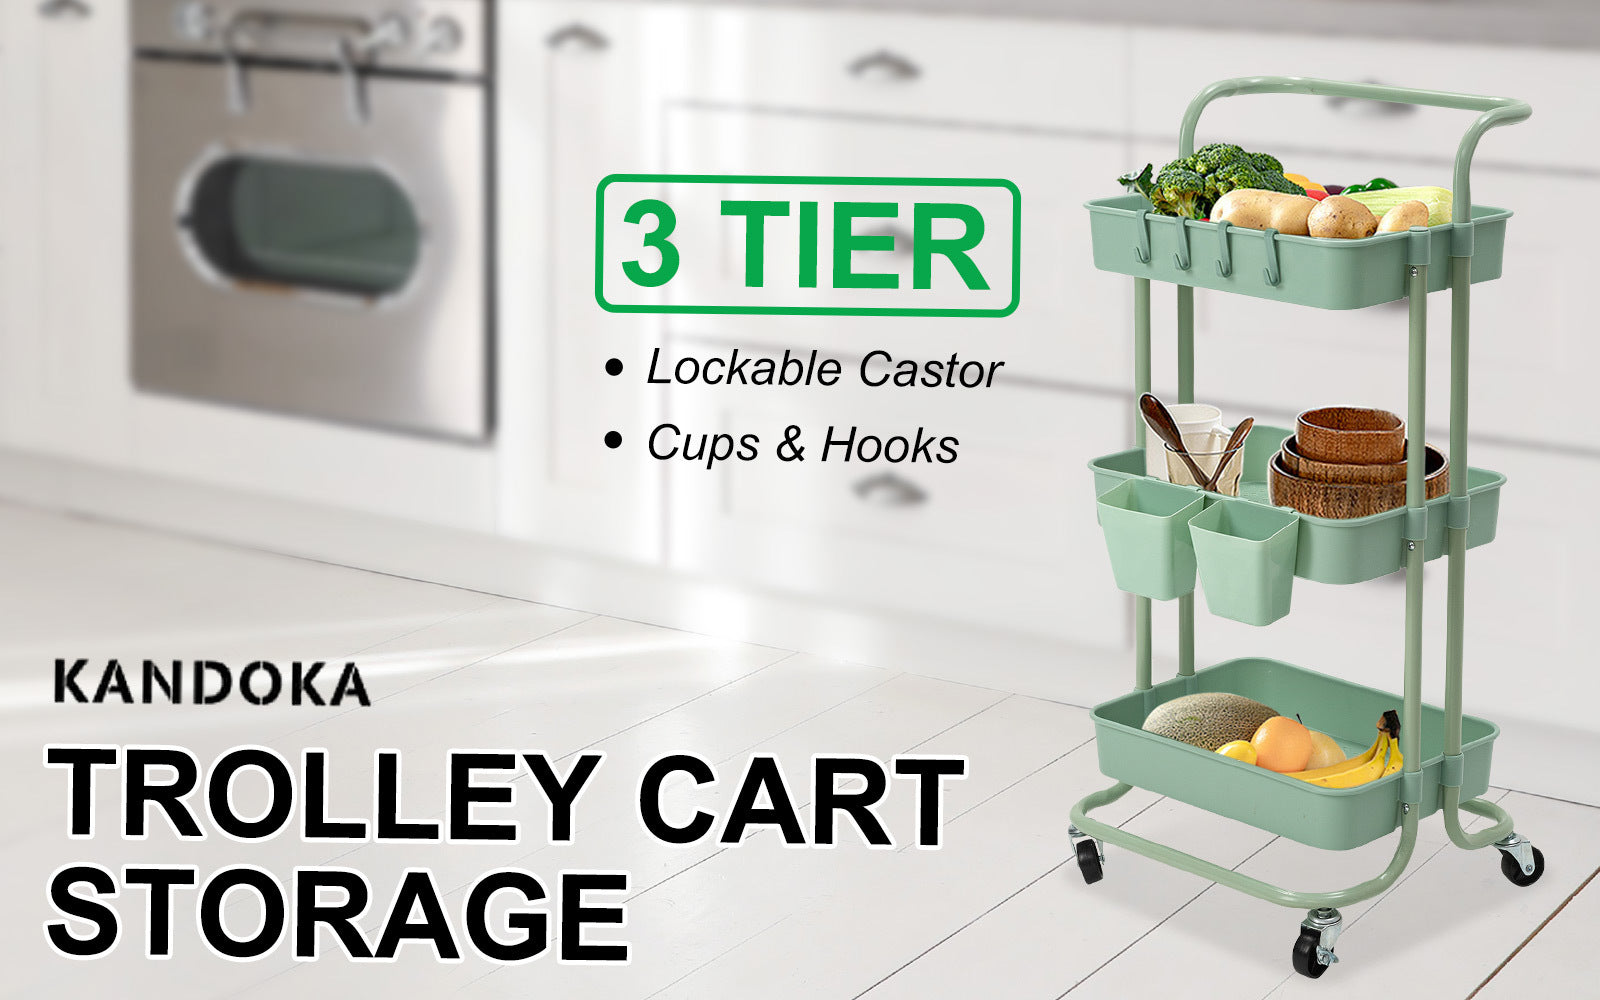 Kandoka 3 Tier Green Trolley Cart Storage Utility Rack Organiser Swivel Kitchen